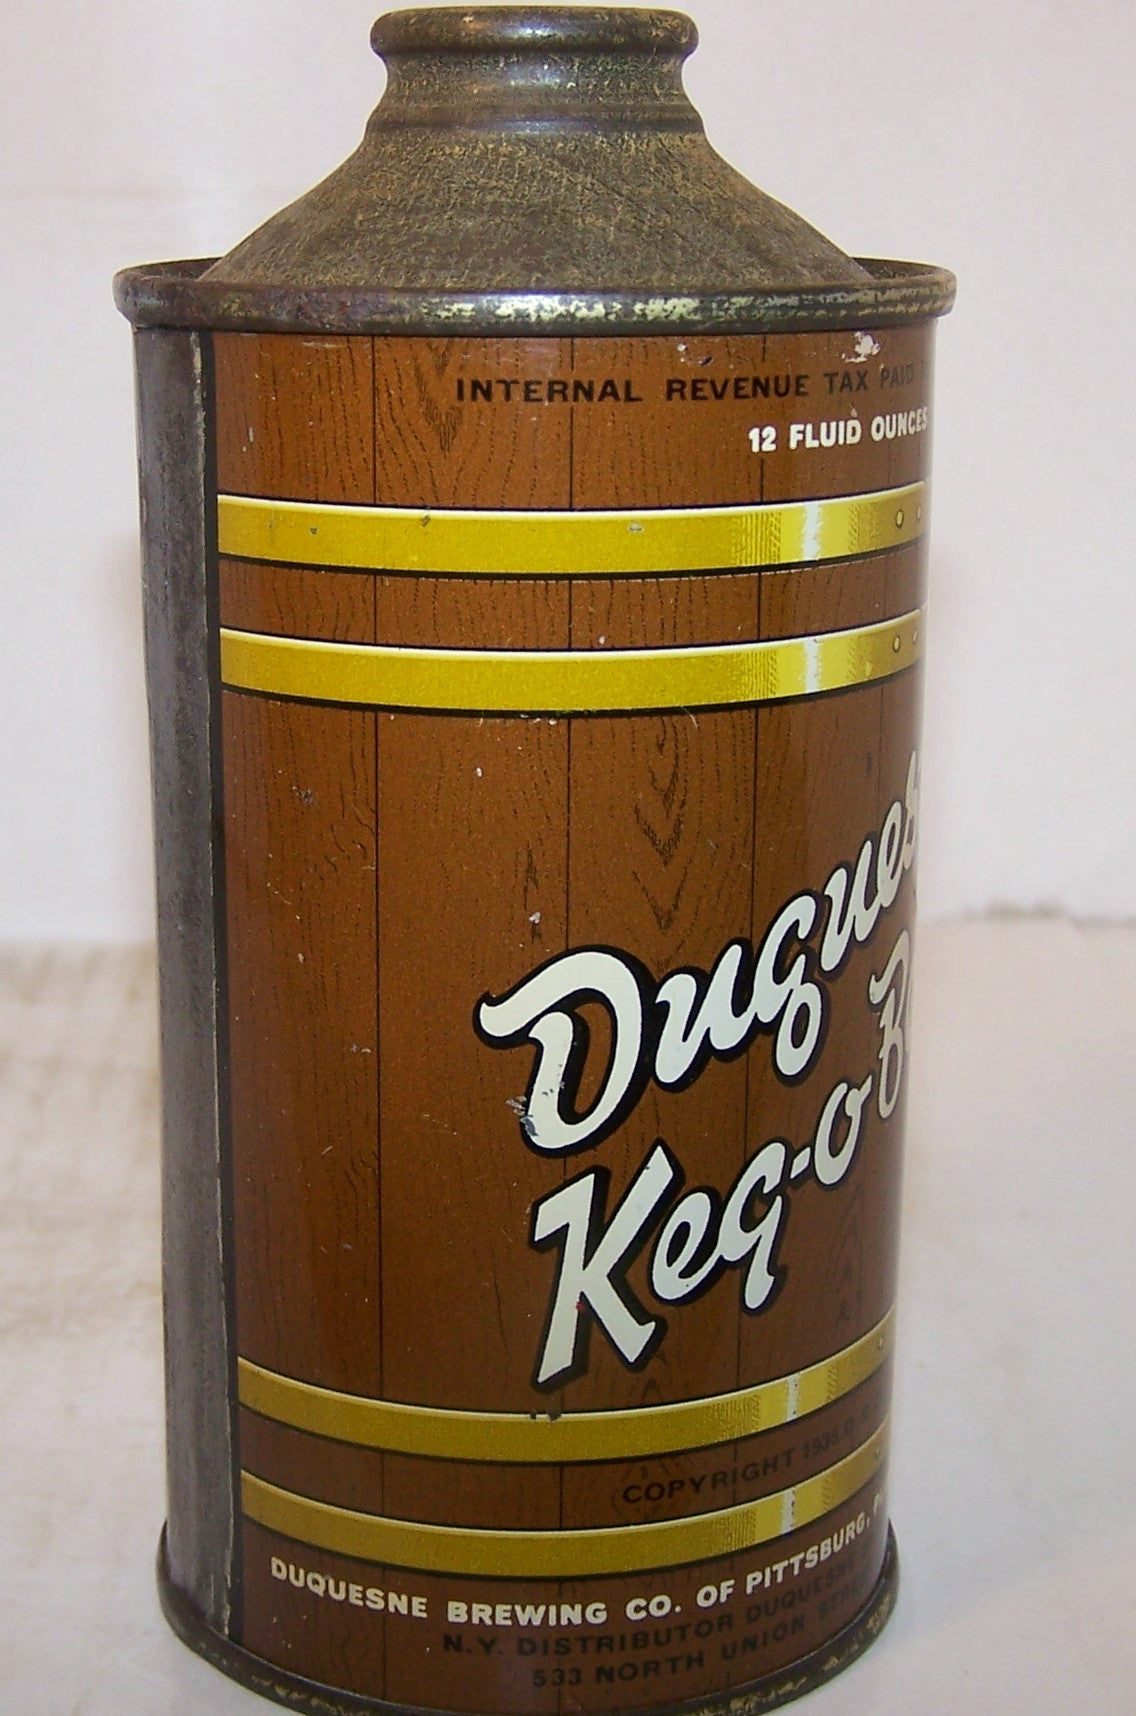 Duquesne Keg-O-Beer, USBC 159-24, Grade 1 Sold on 05/01/16